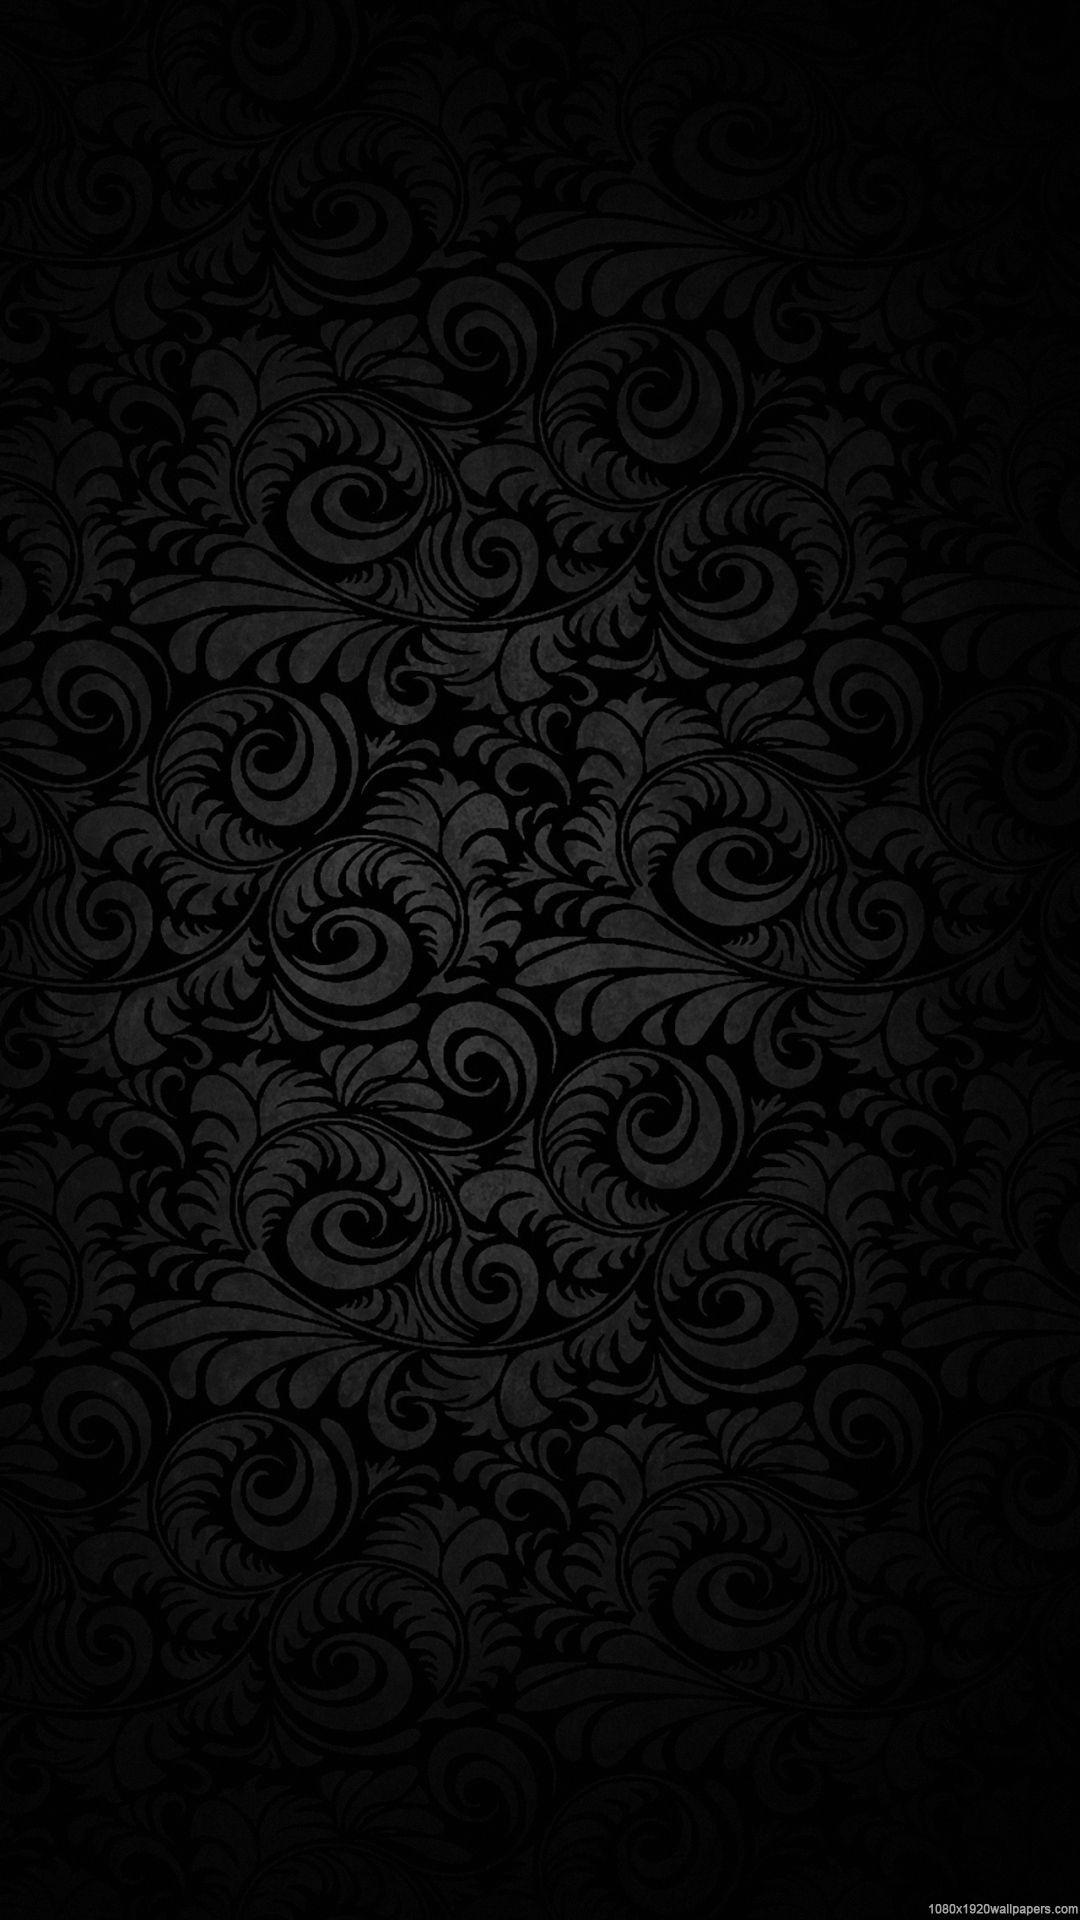 Dark Mobile Wallpaper